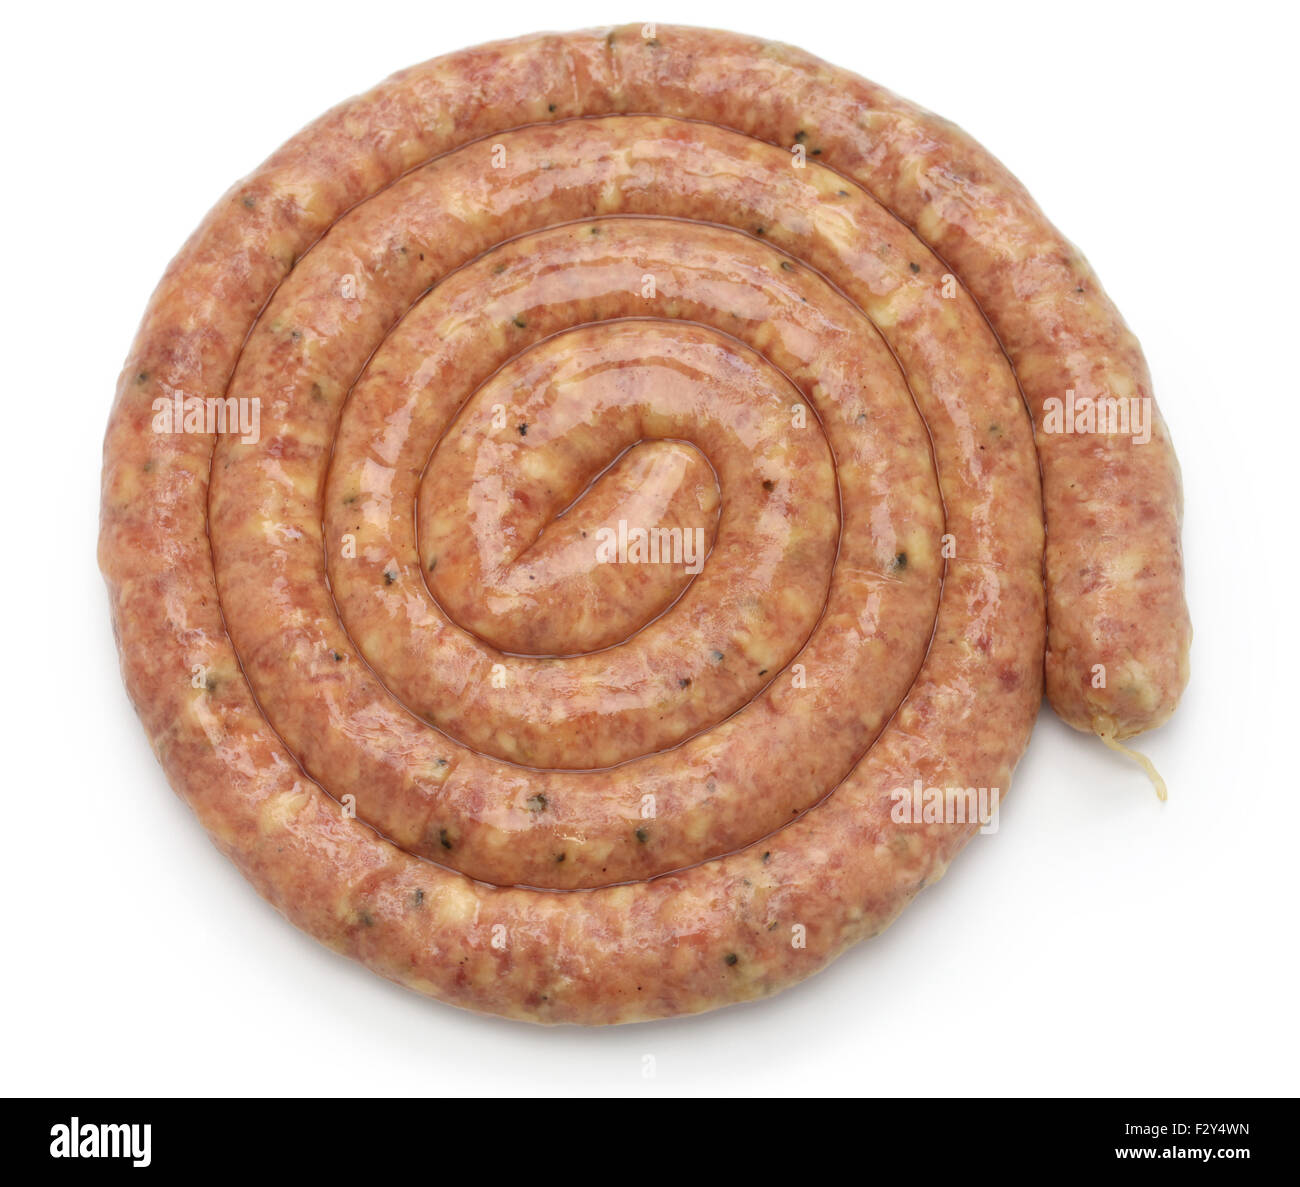 raw cumberland sausage, spiral pork sausage isolated on white background Stock Photo